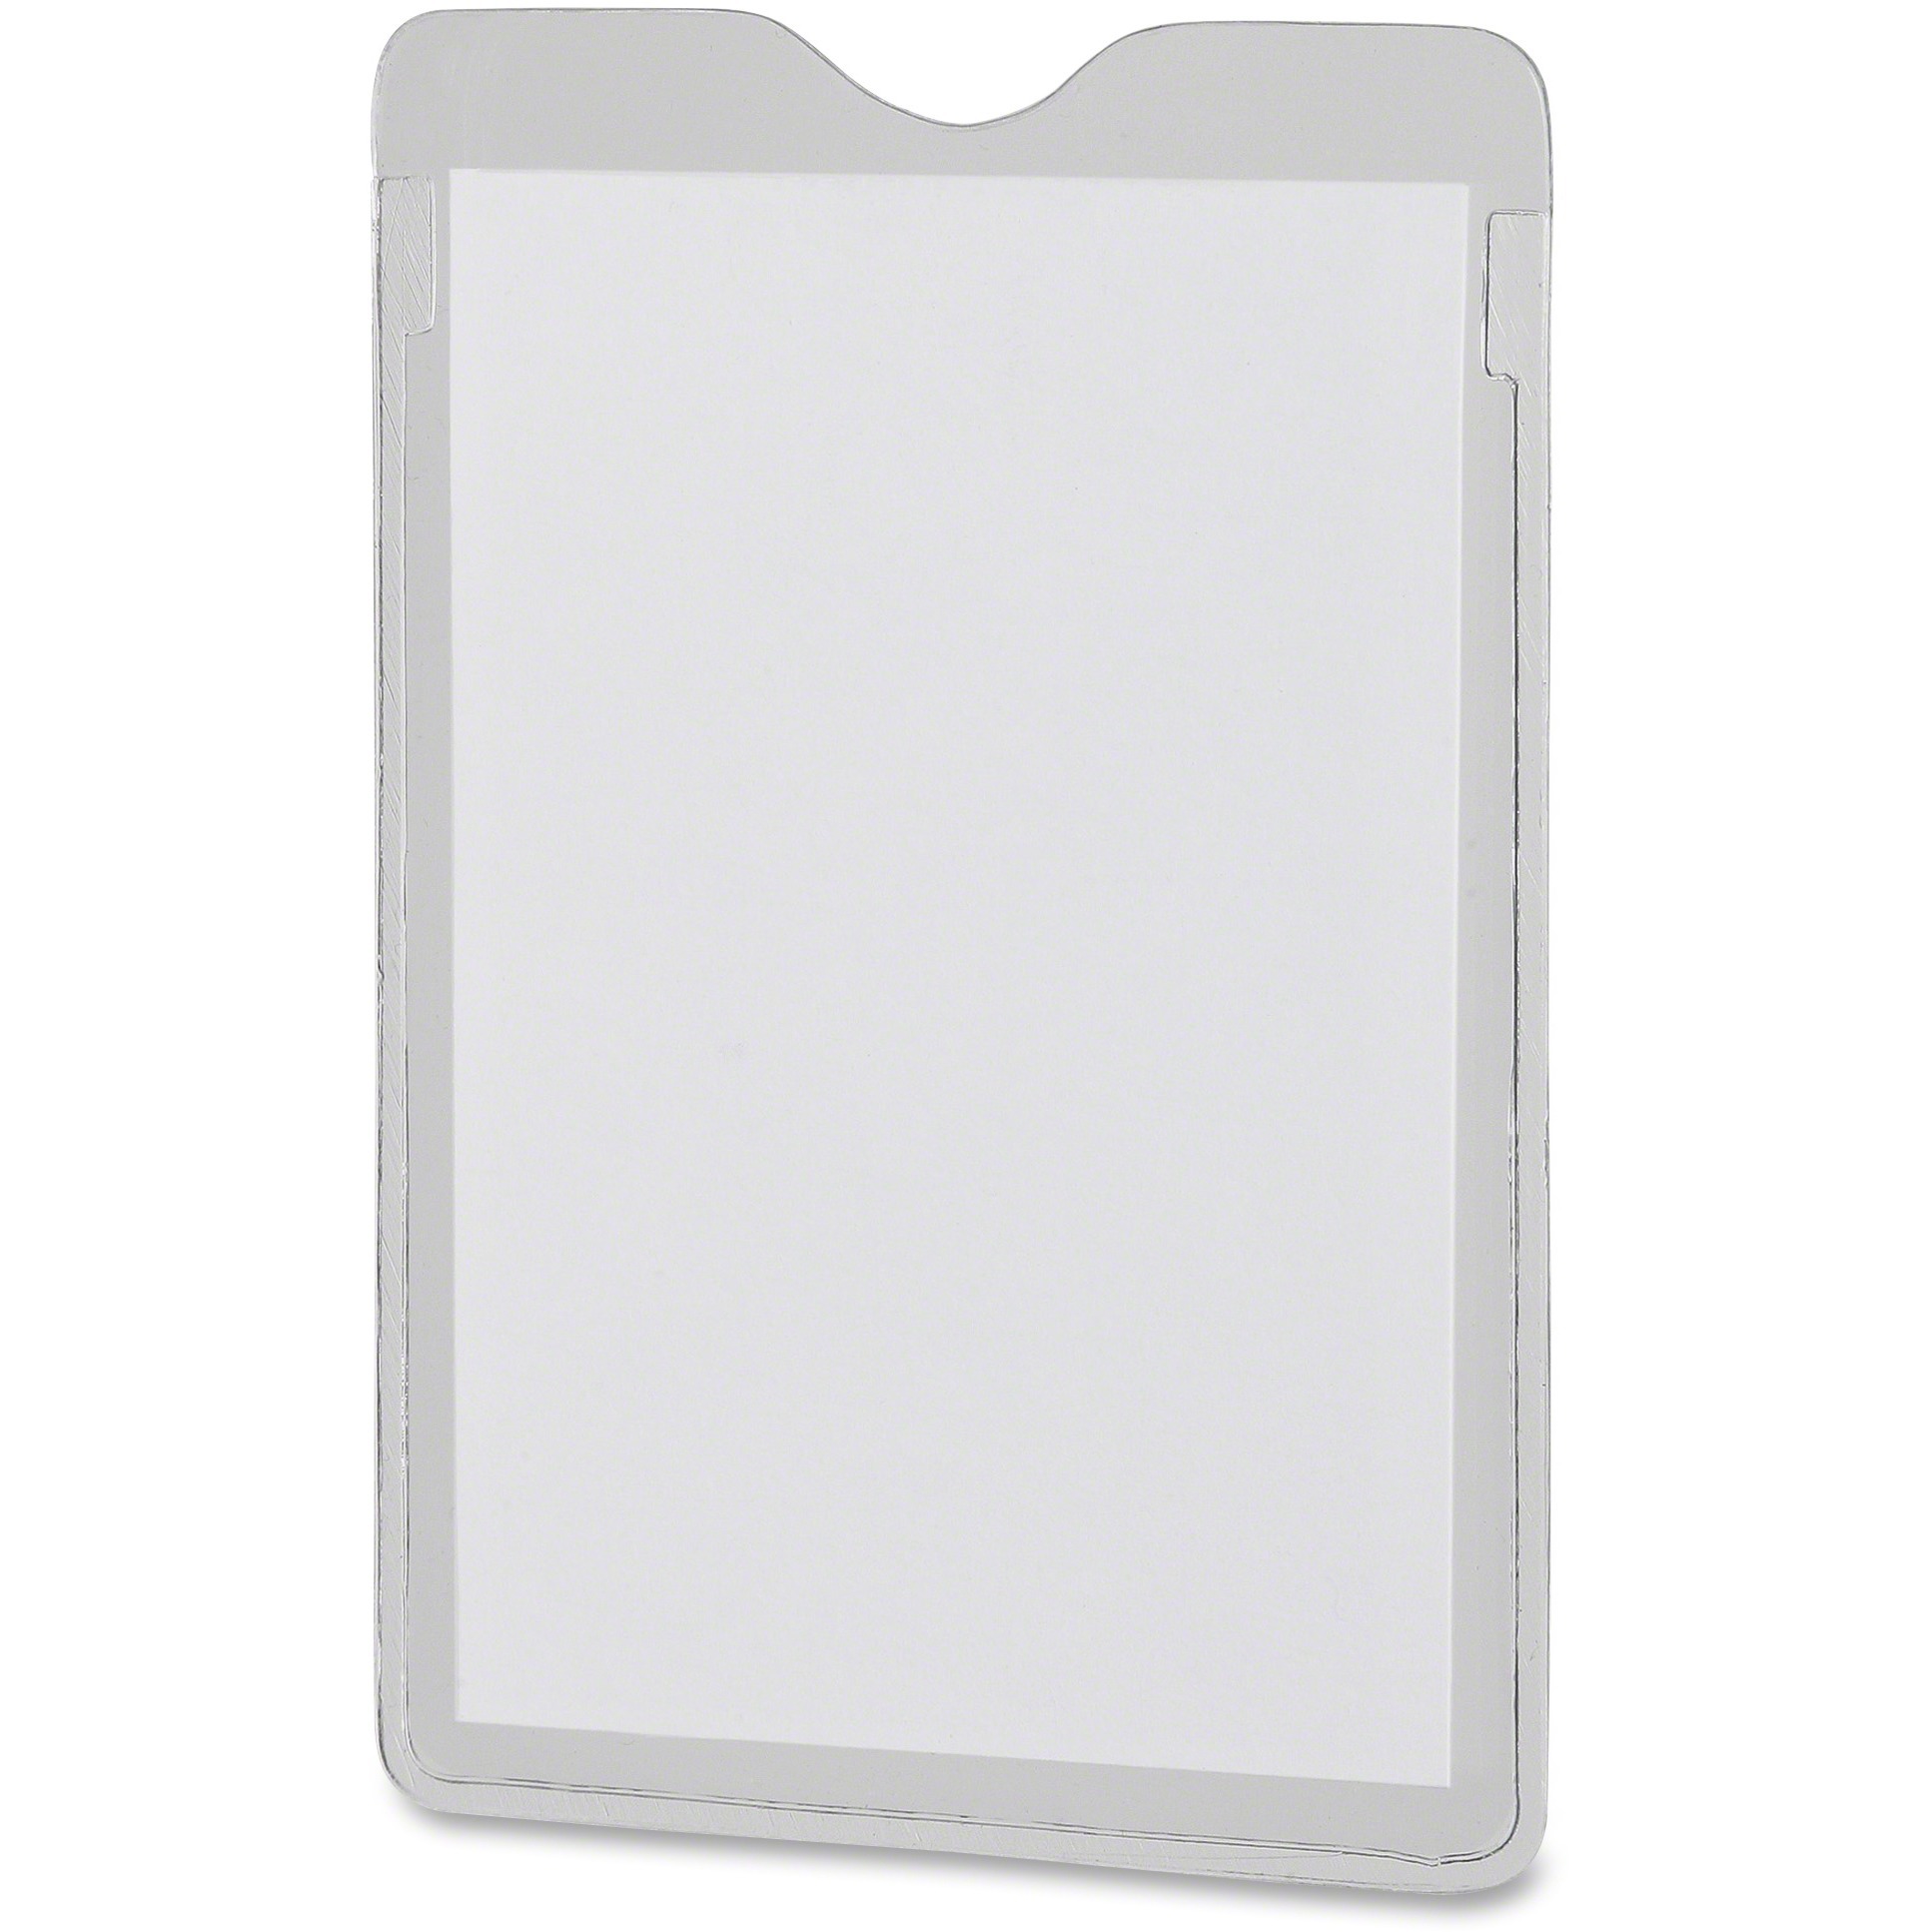 Utili-Jac Heavy-Duty Clear Plastic Envelopes, 2 1/4 x 3 1/2, 50/Box